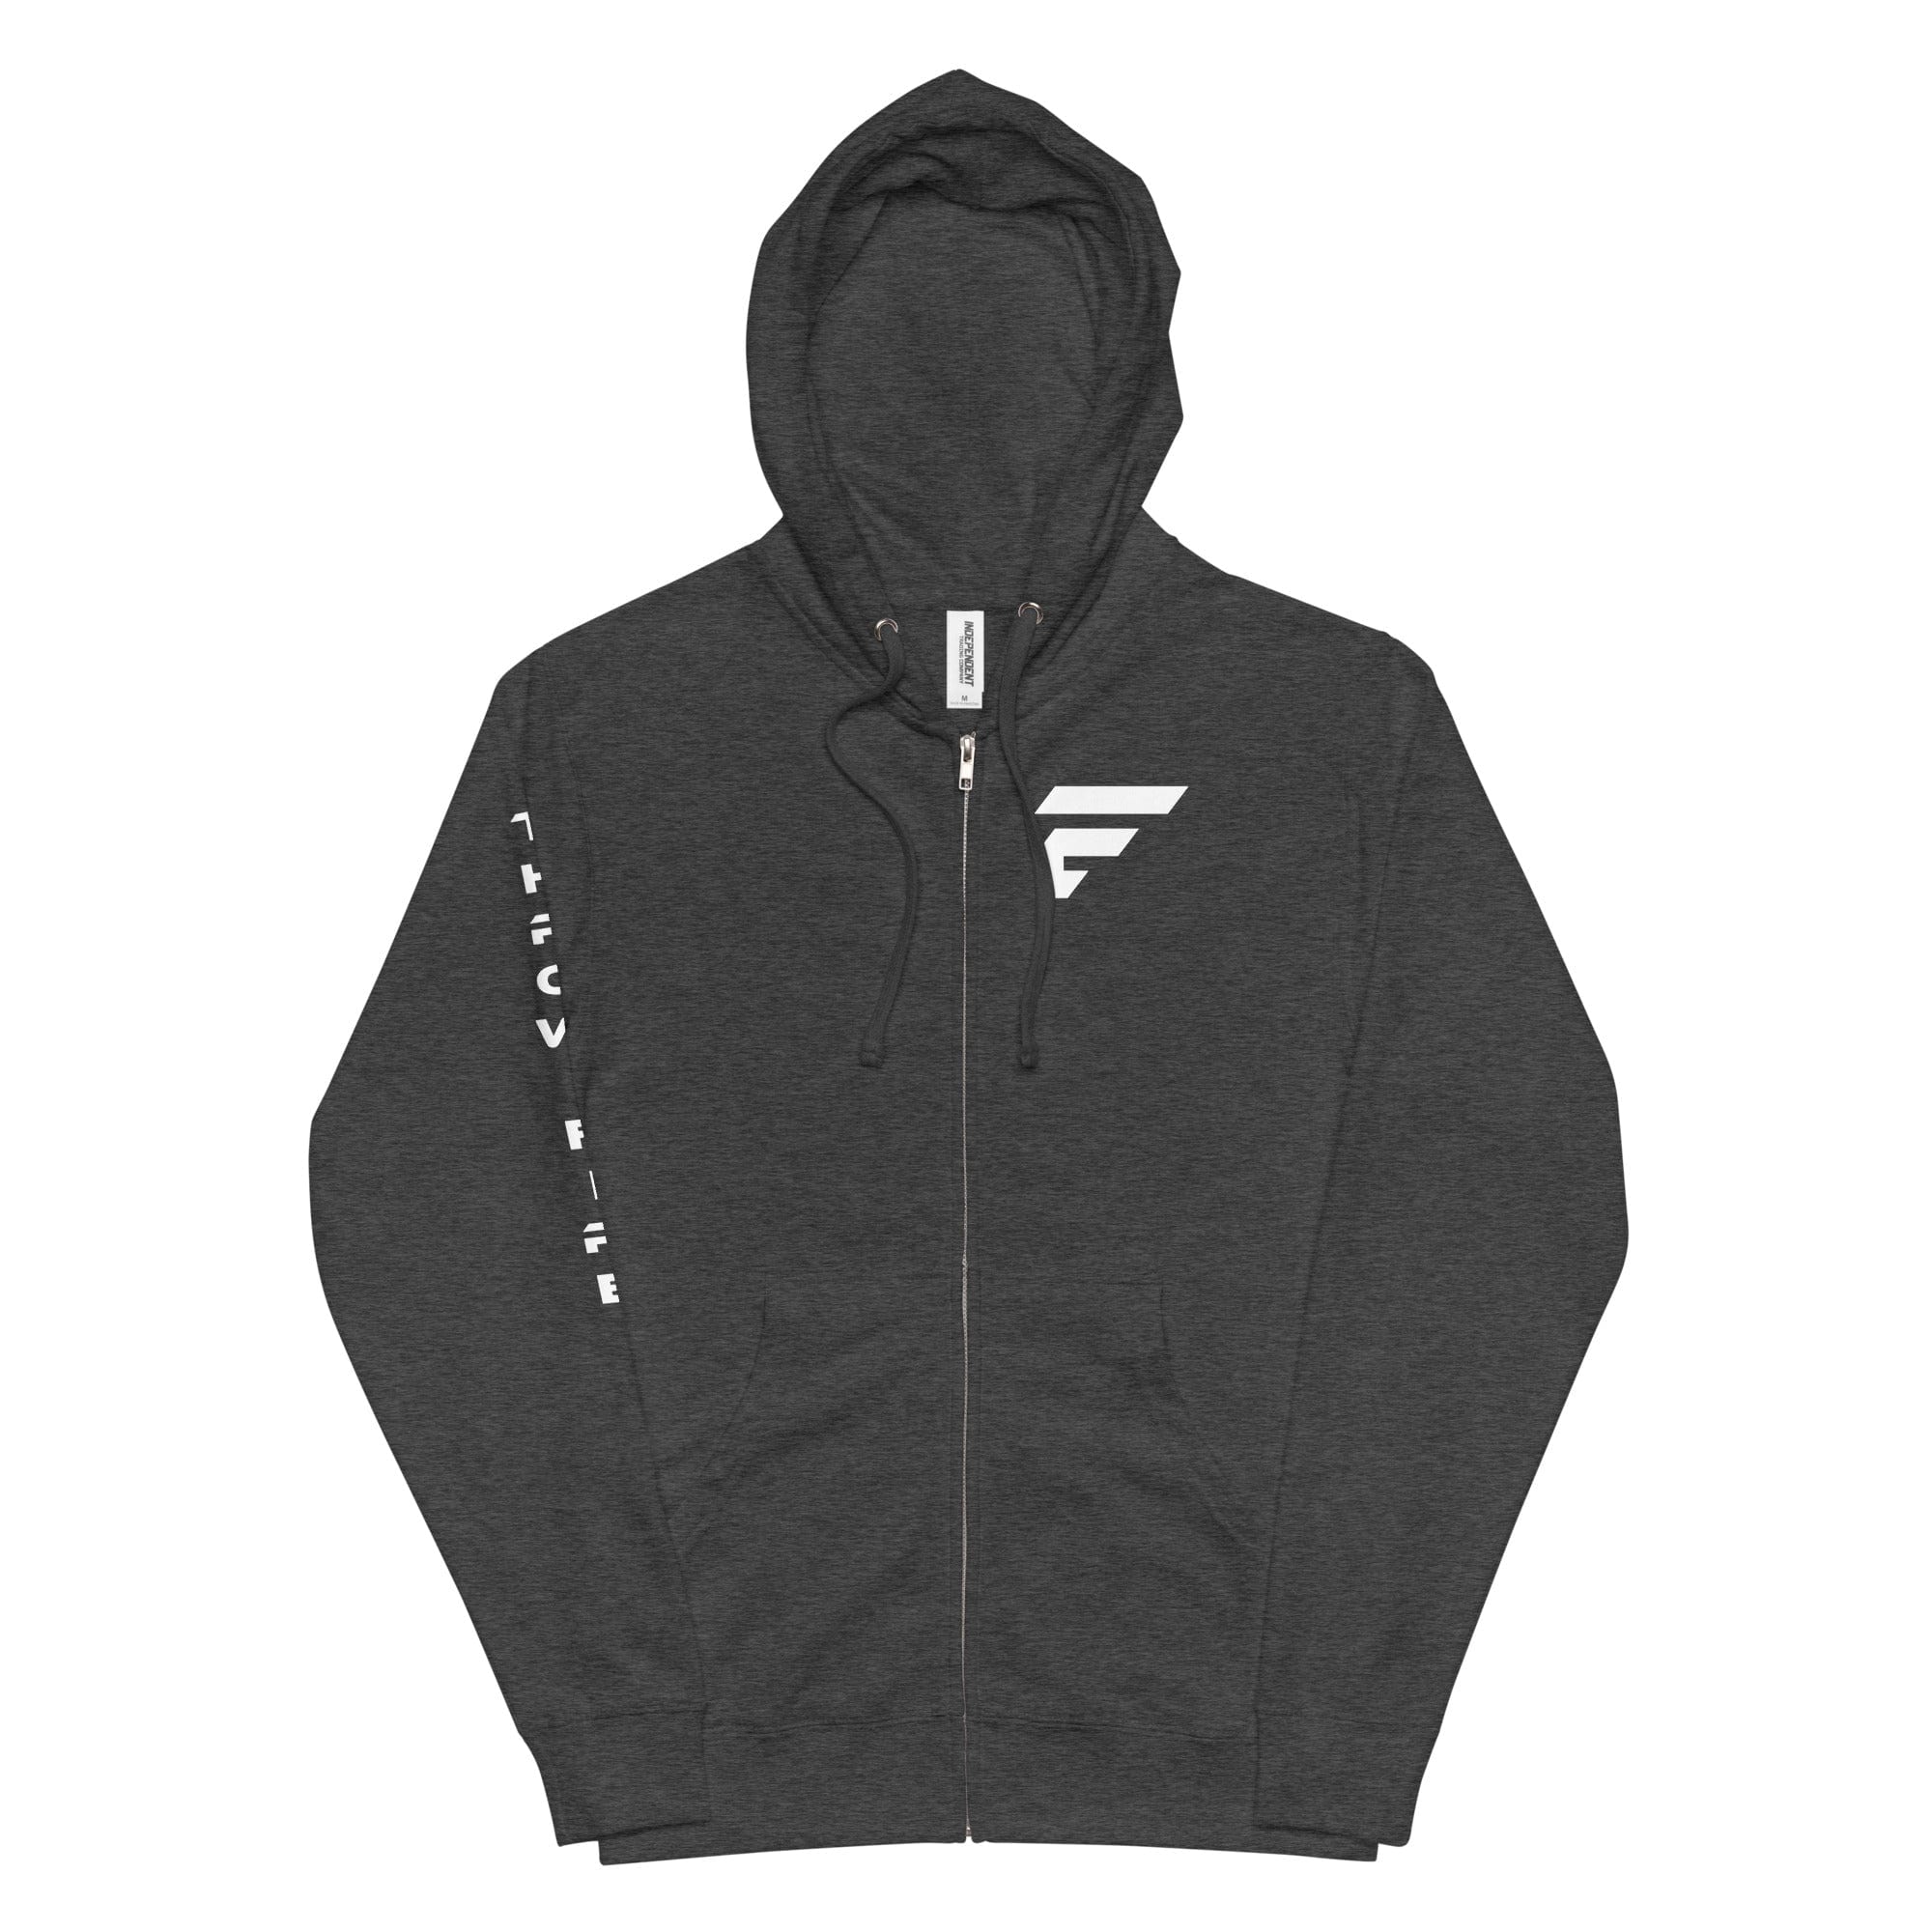 Dark heathered grey unisex fleece zip-up hoodie with Fire Cornhole logo in white